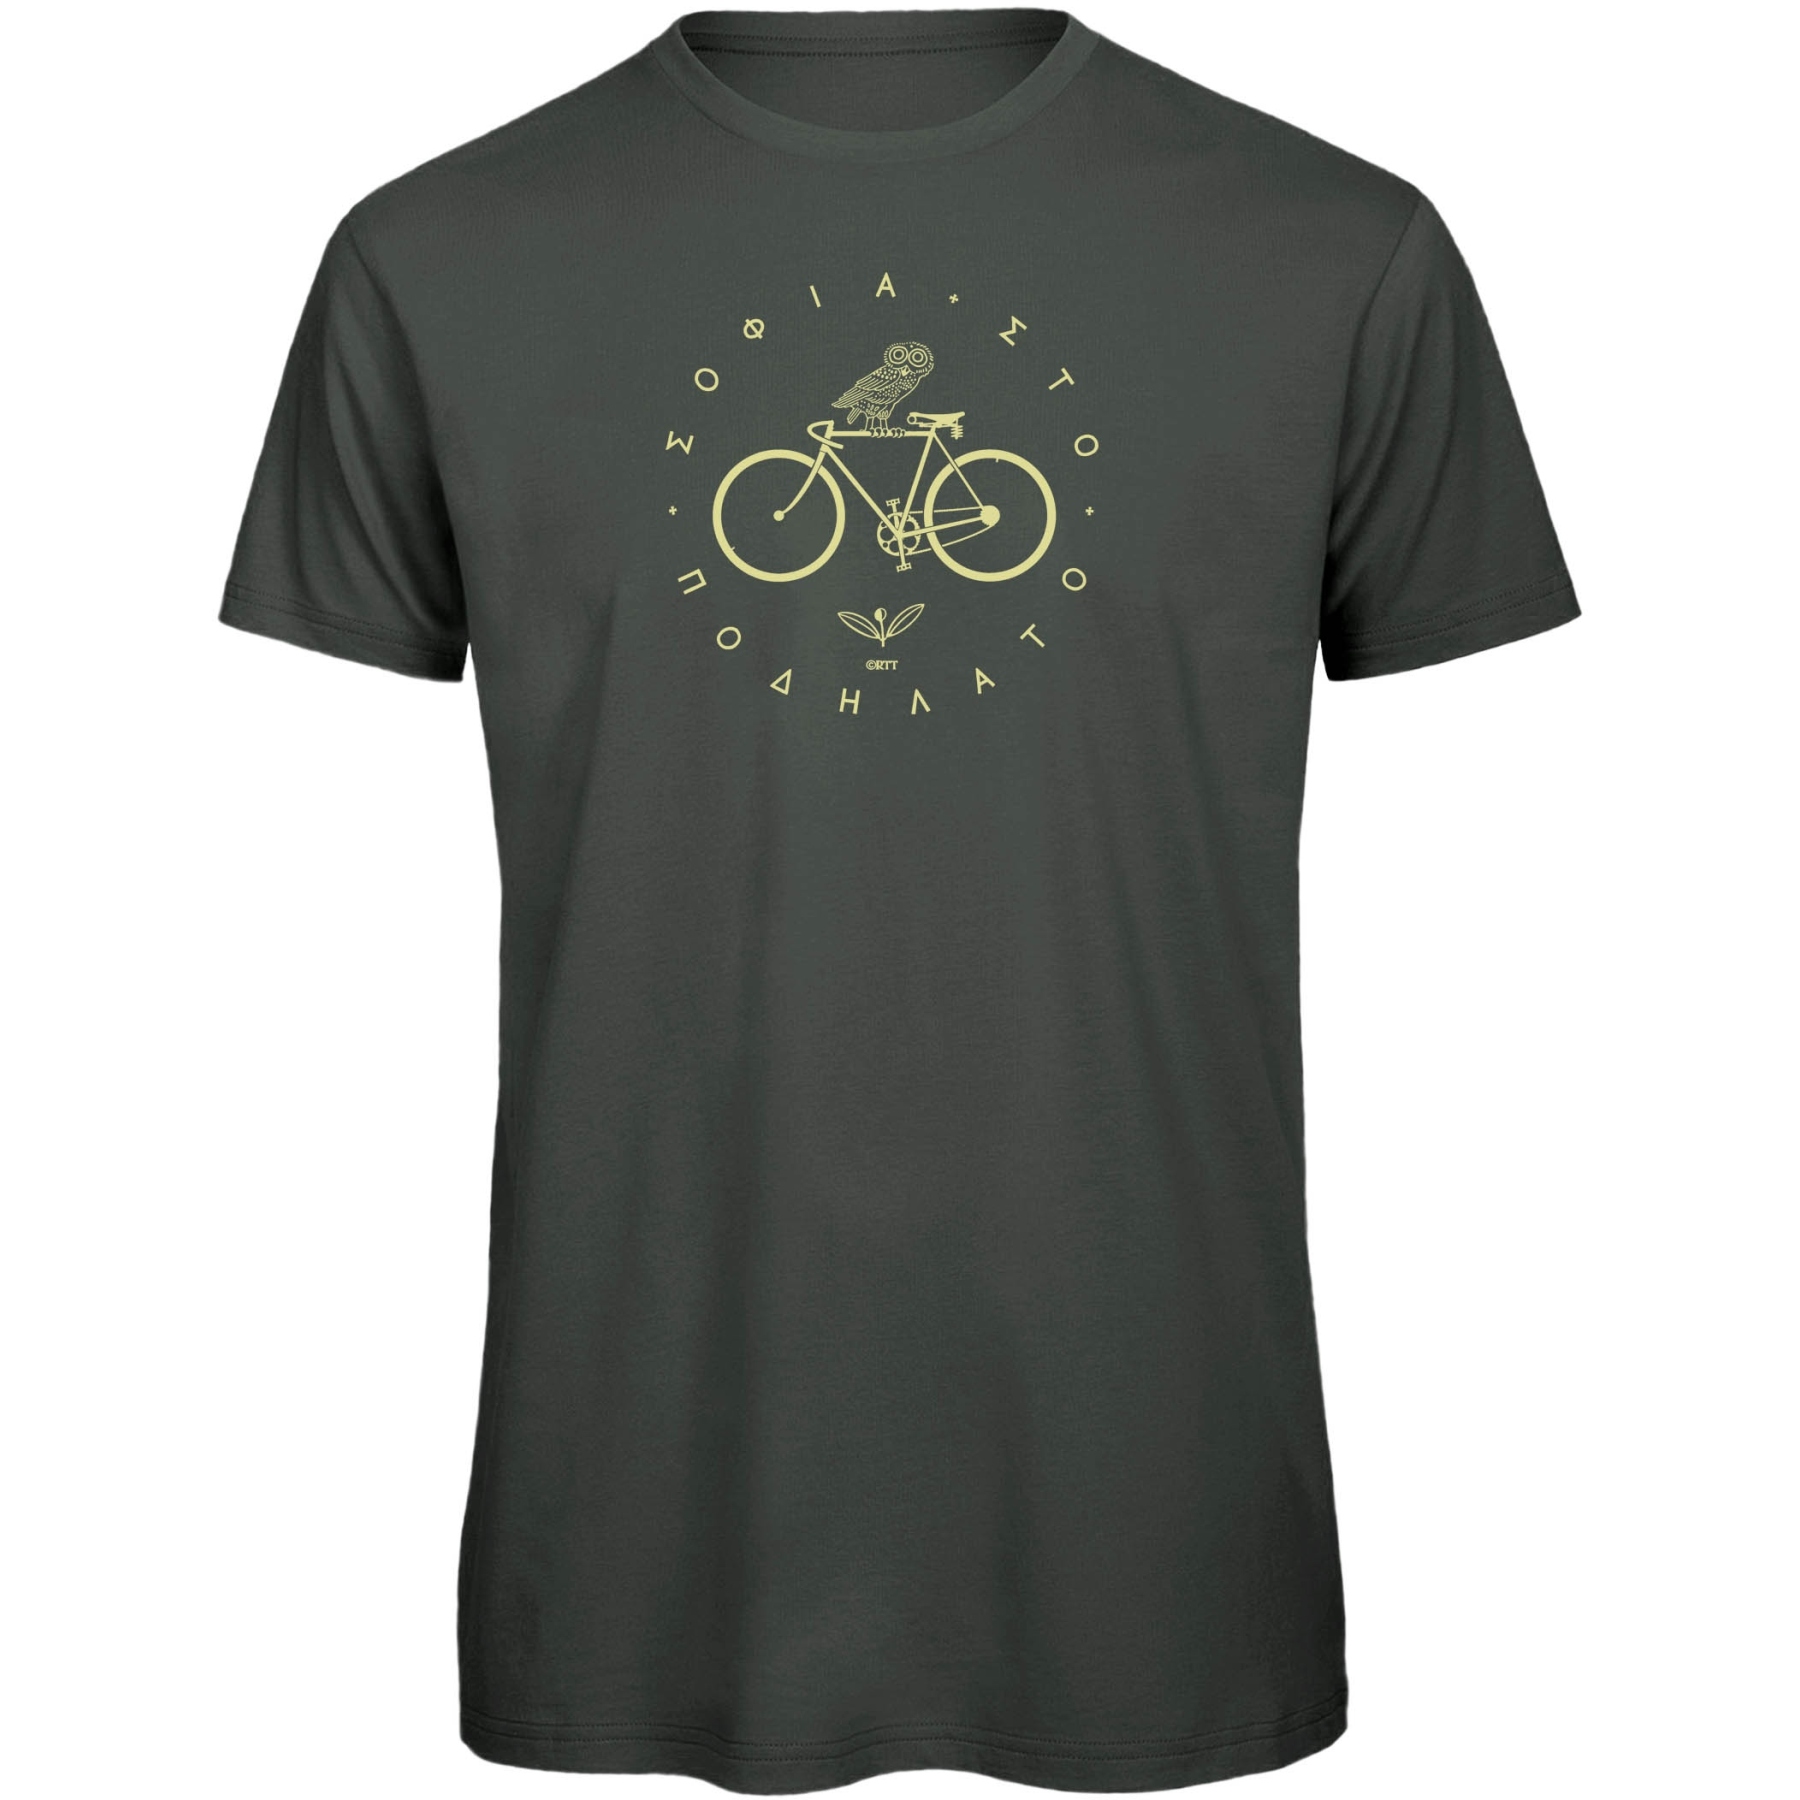 Imagen de RTTshirts Camiseta Bicicleta - Minerva - gris oscuro